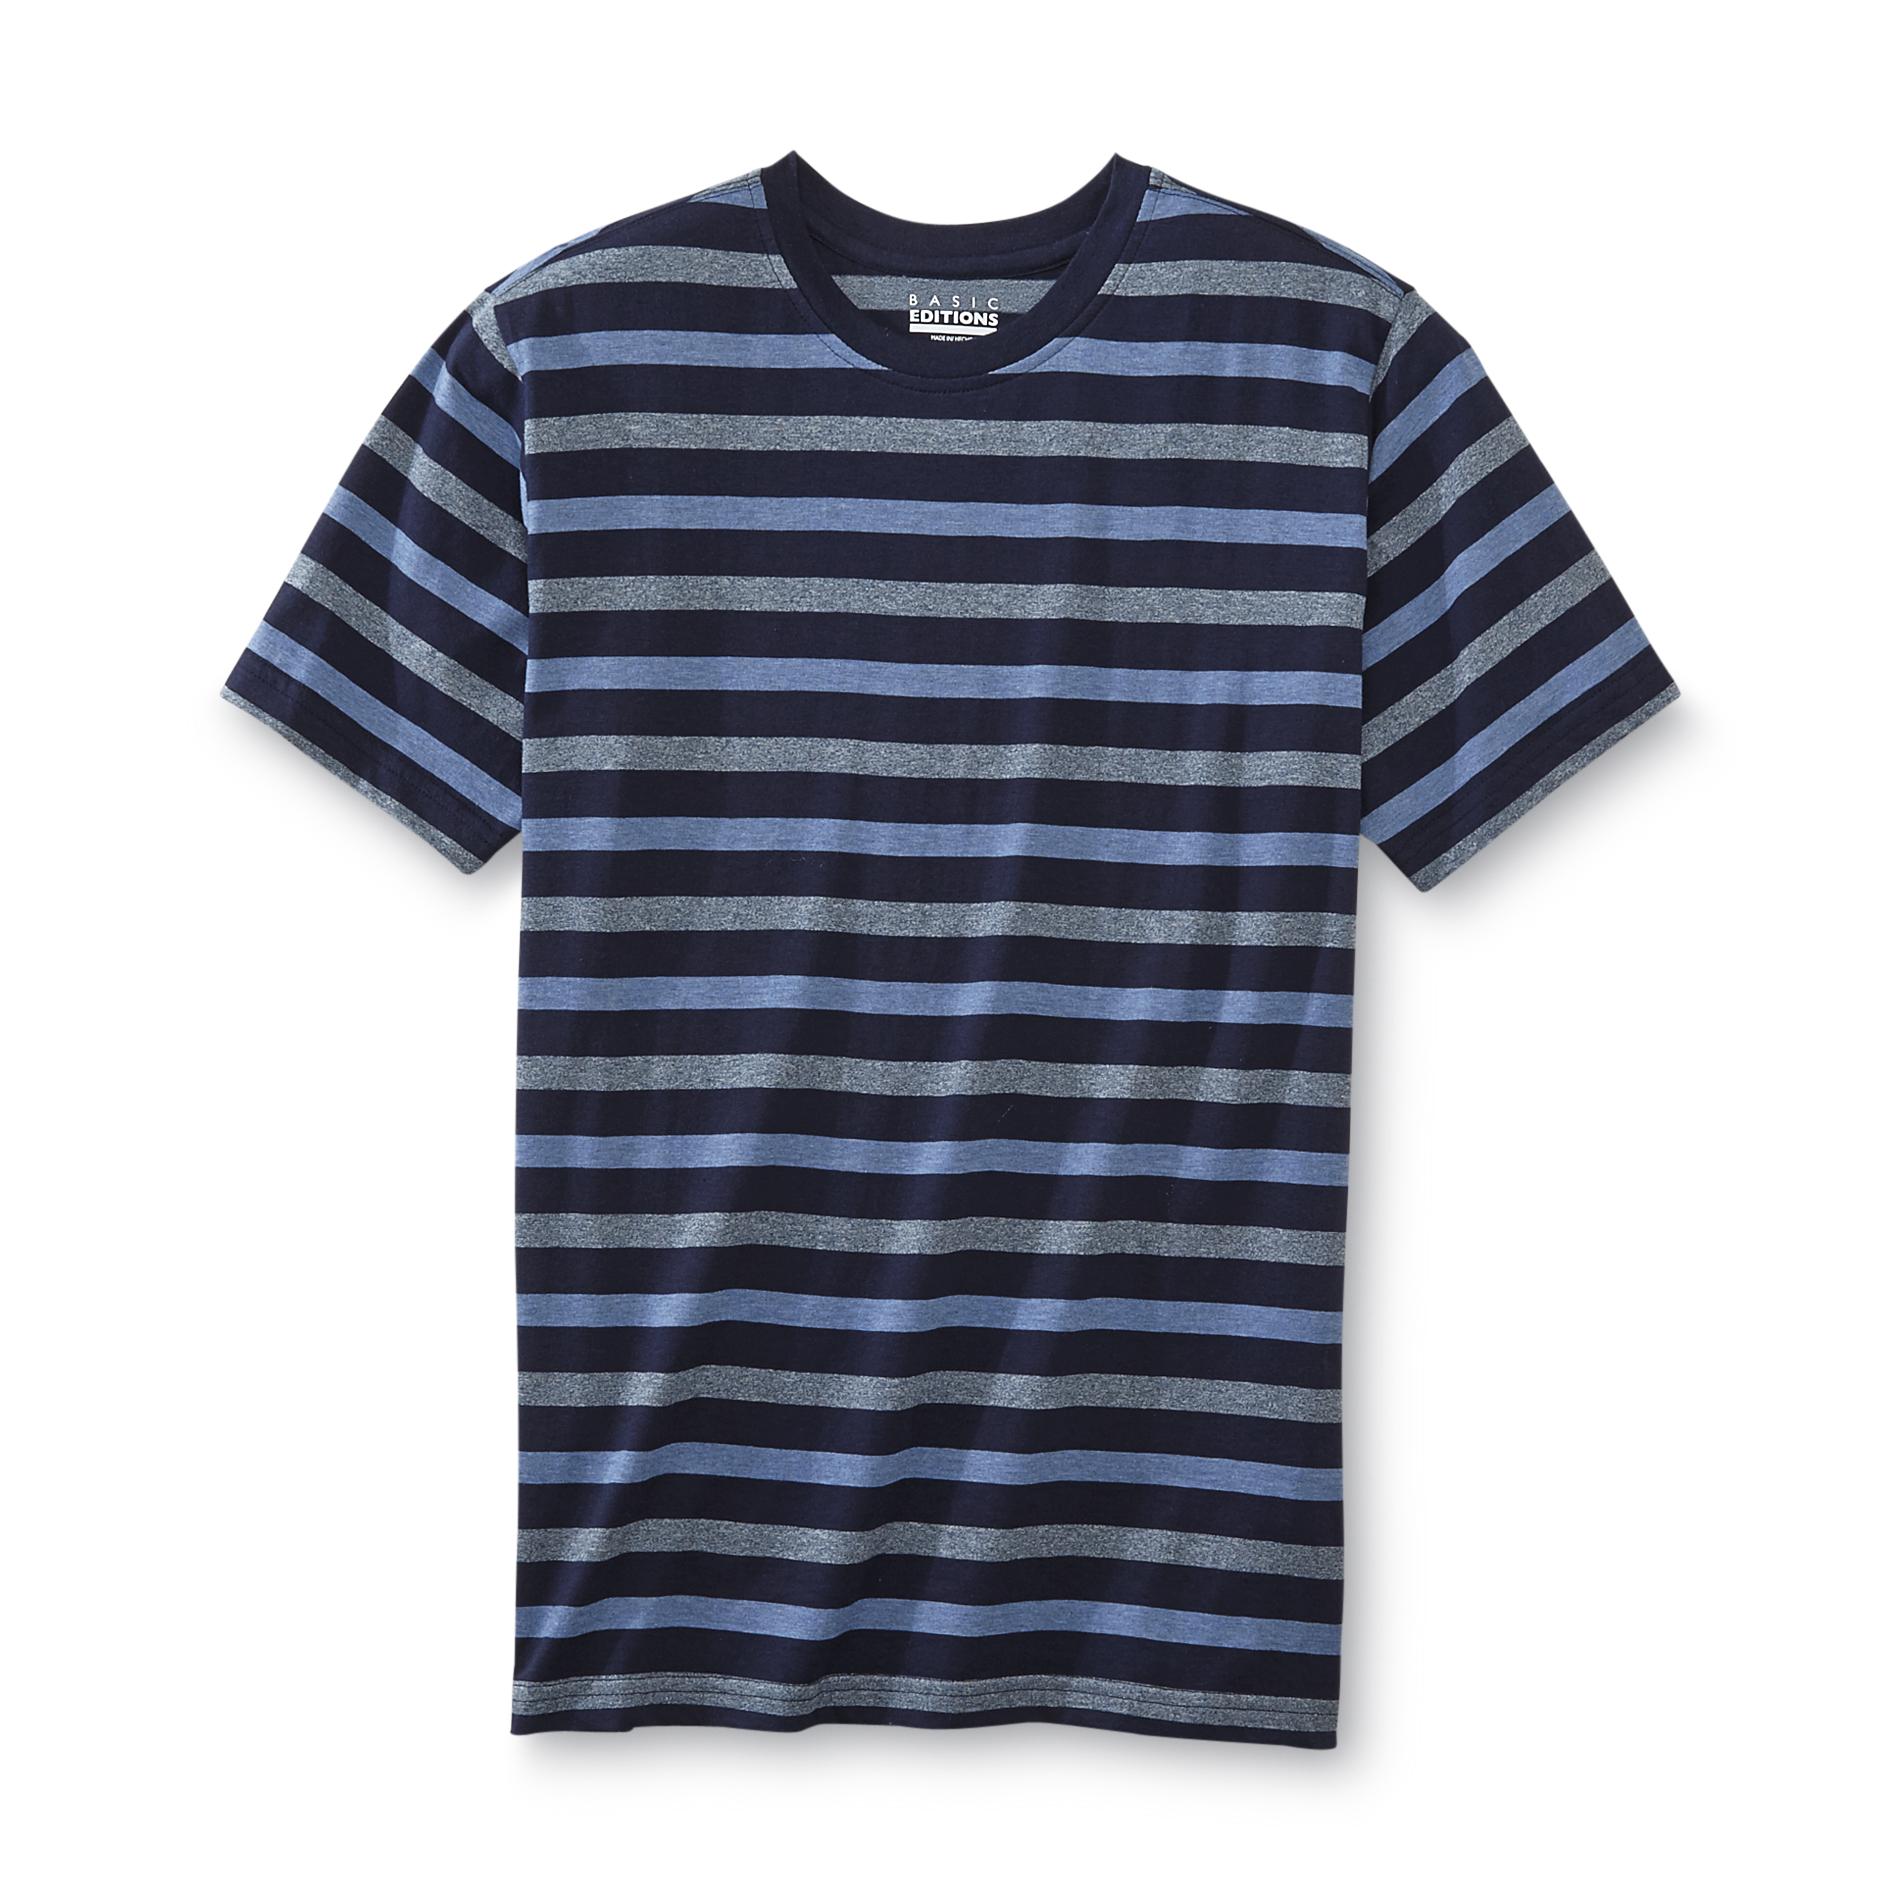 Basic Editions Men's T-Shirt - Heathered Stripe